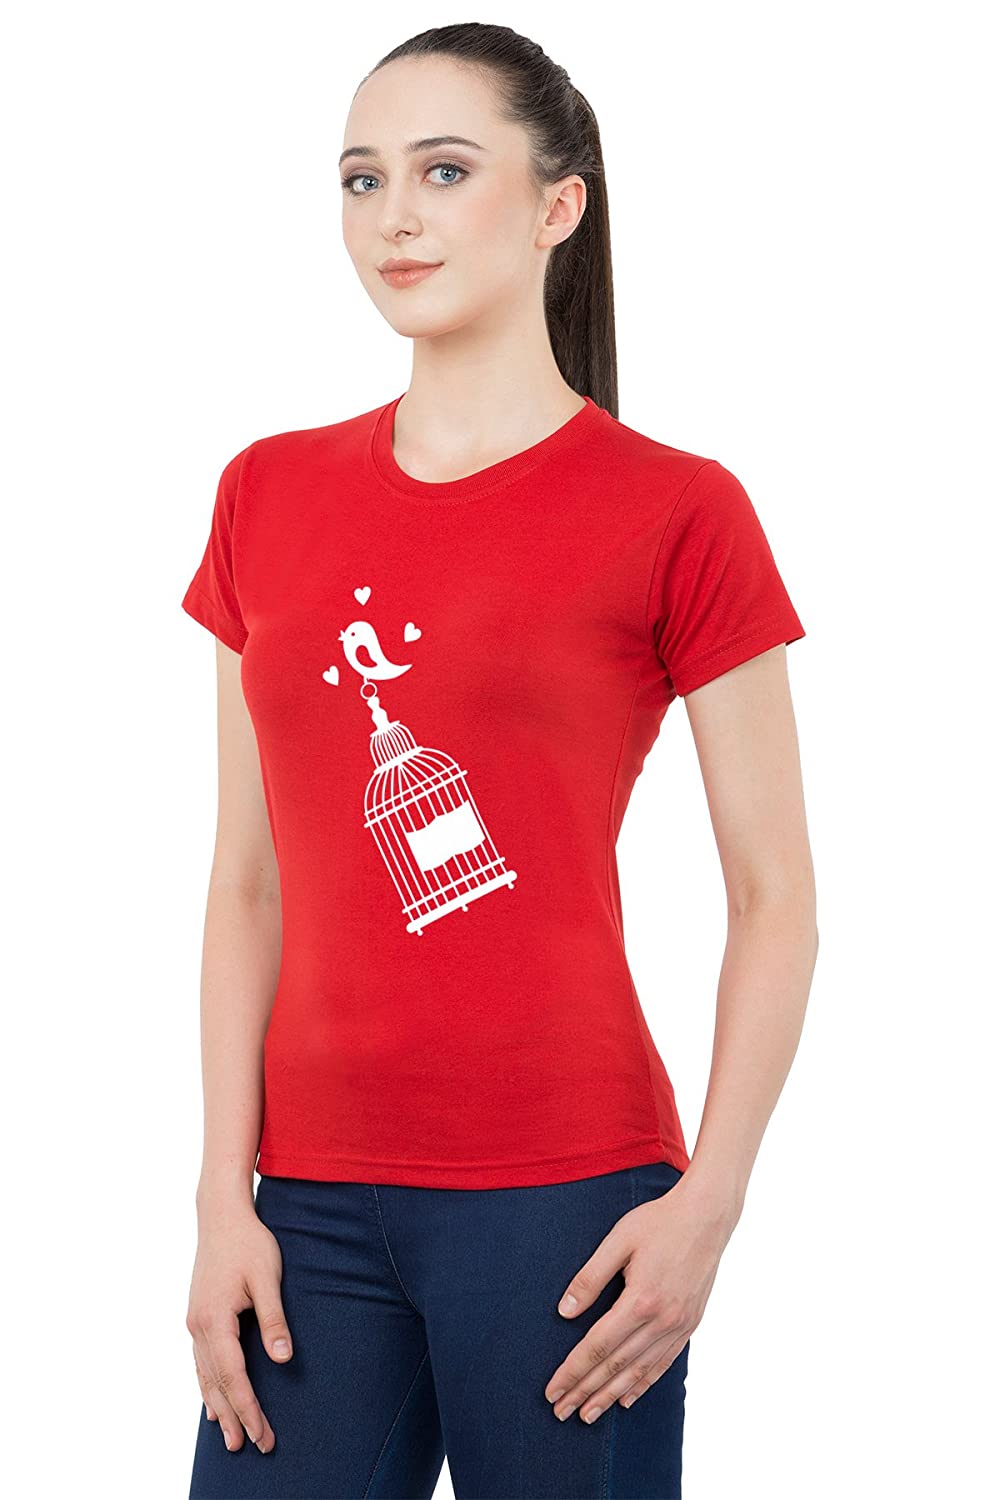 Love Bird matching Couple T shirts- Red